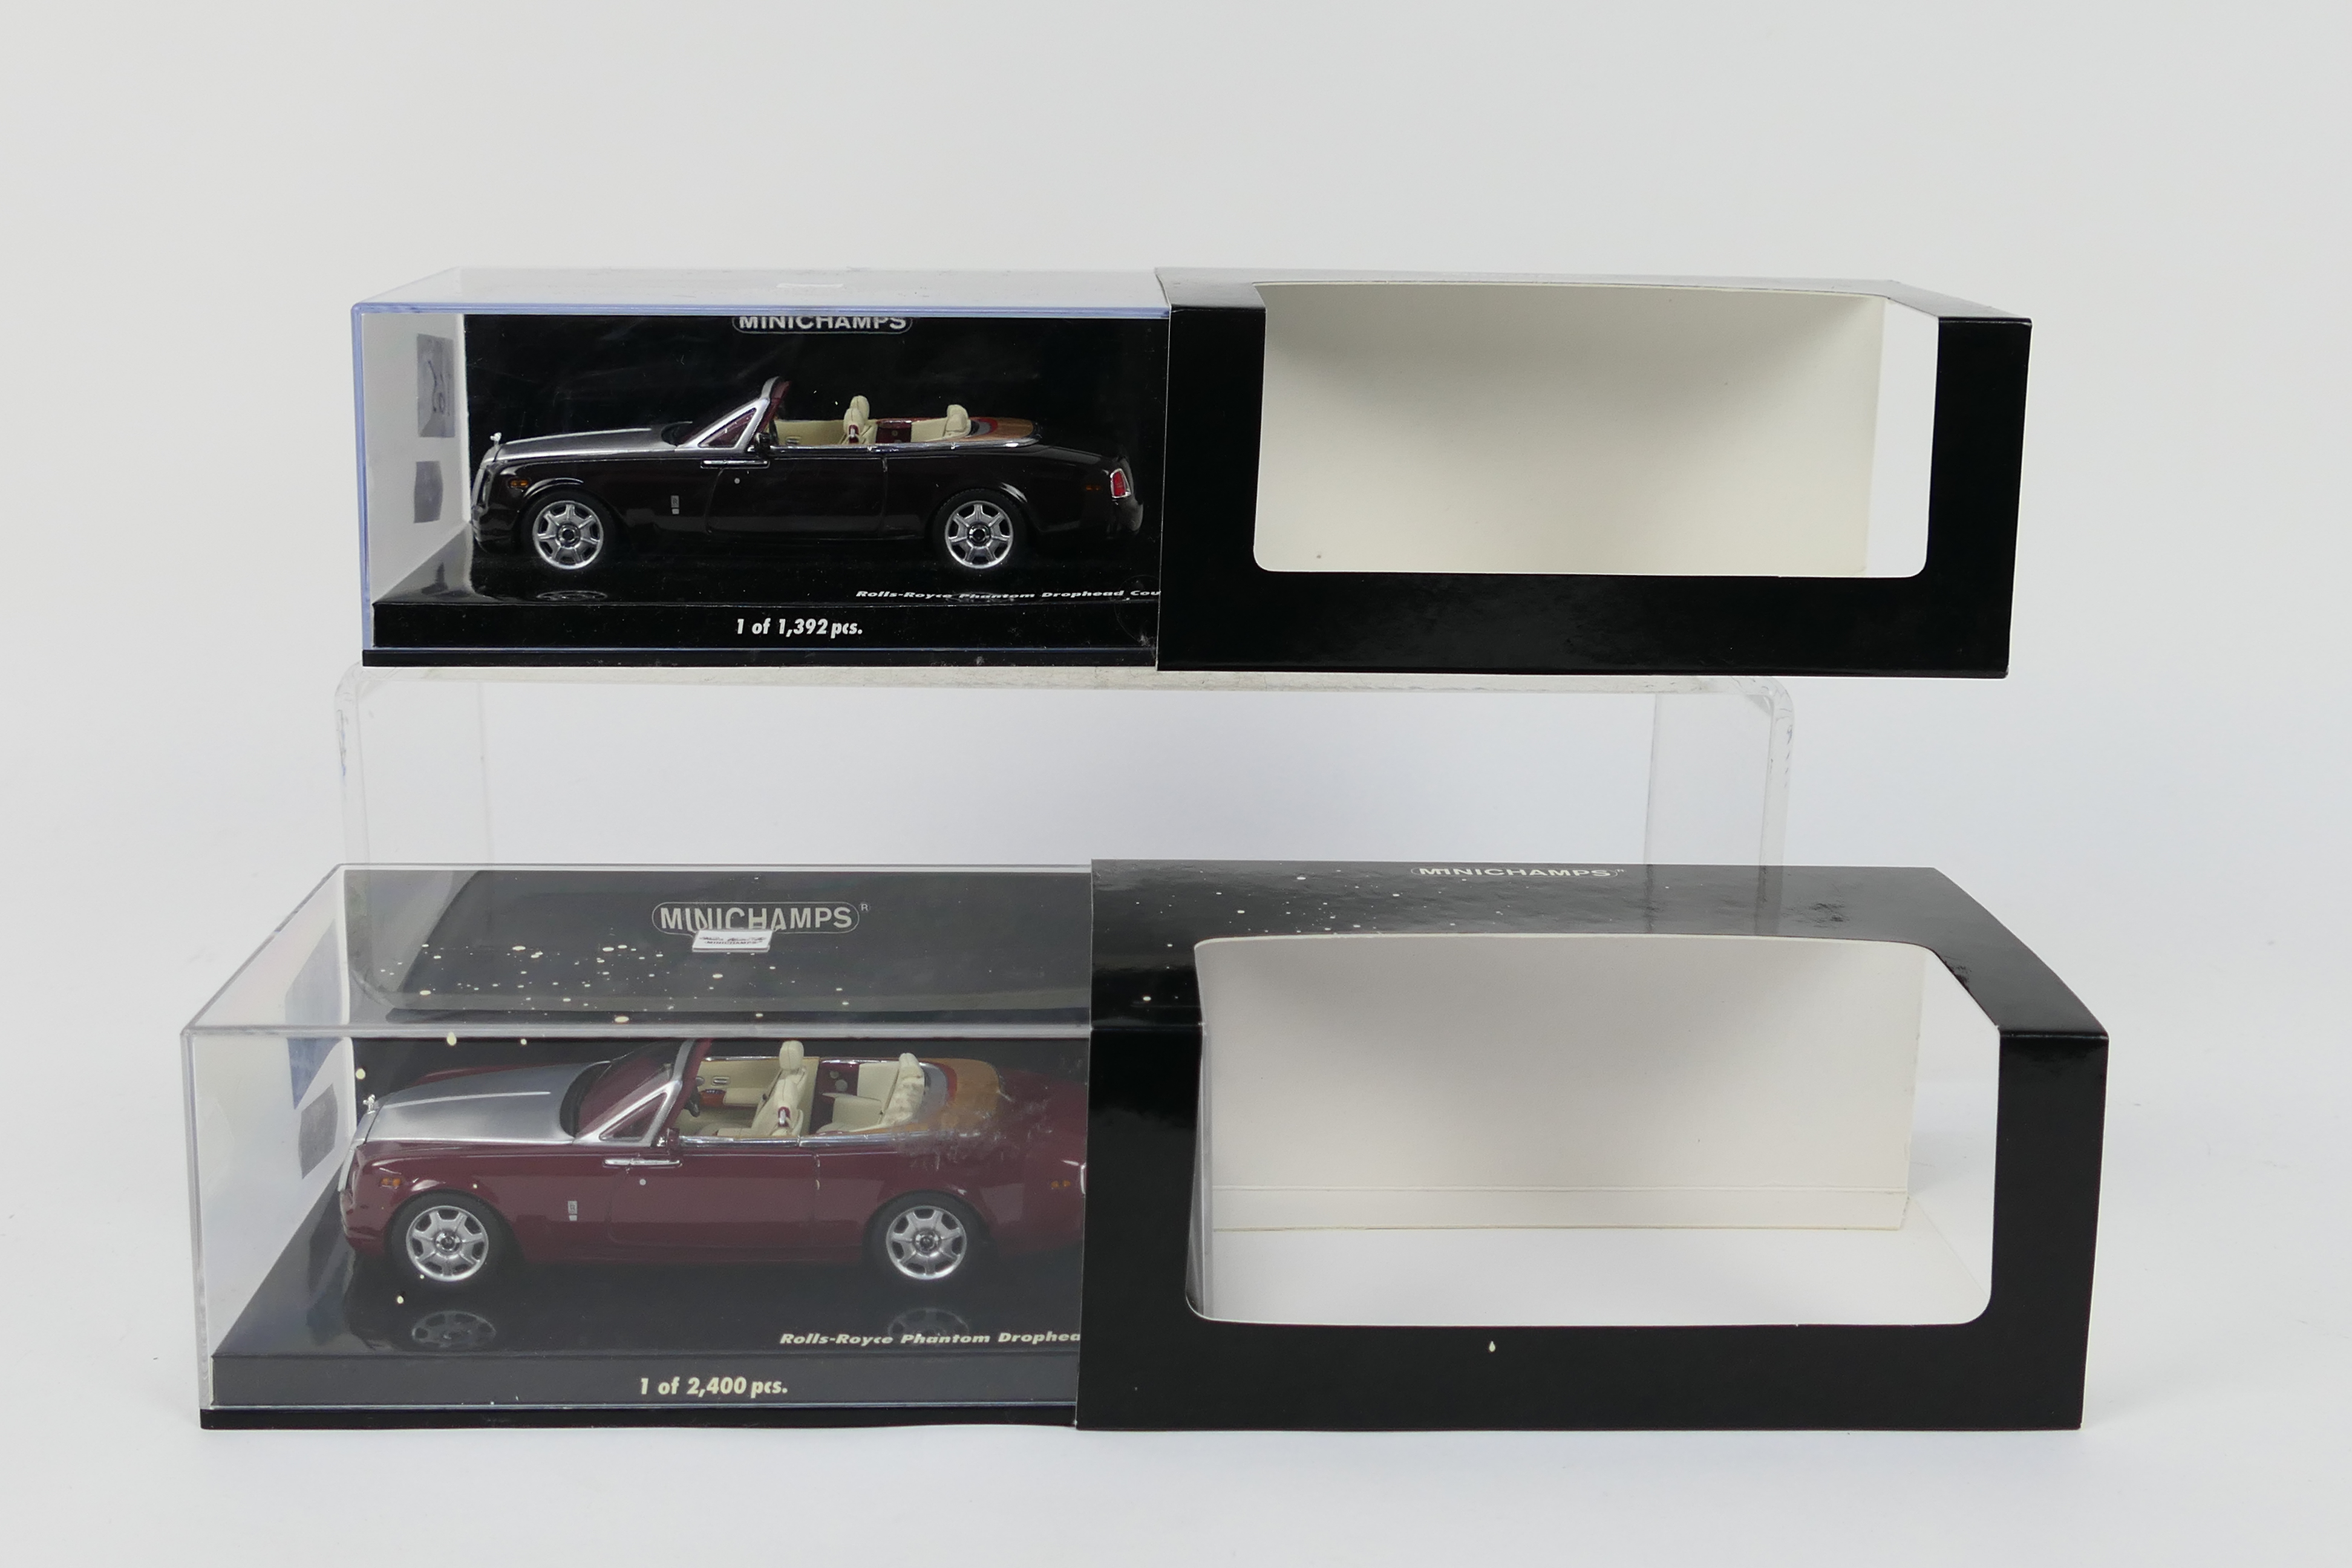 Minichamps - 2 x boxed 1:43 scale Rolls-Royce die-cast model vehicles - Lot includes a #436 134731